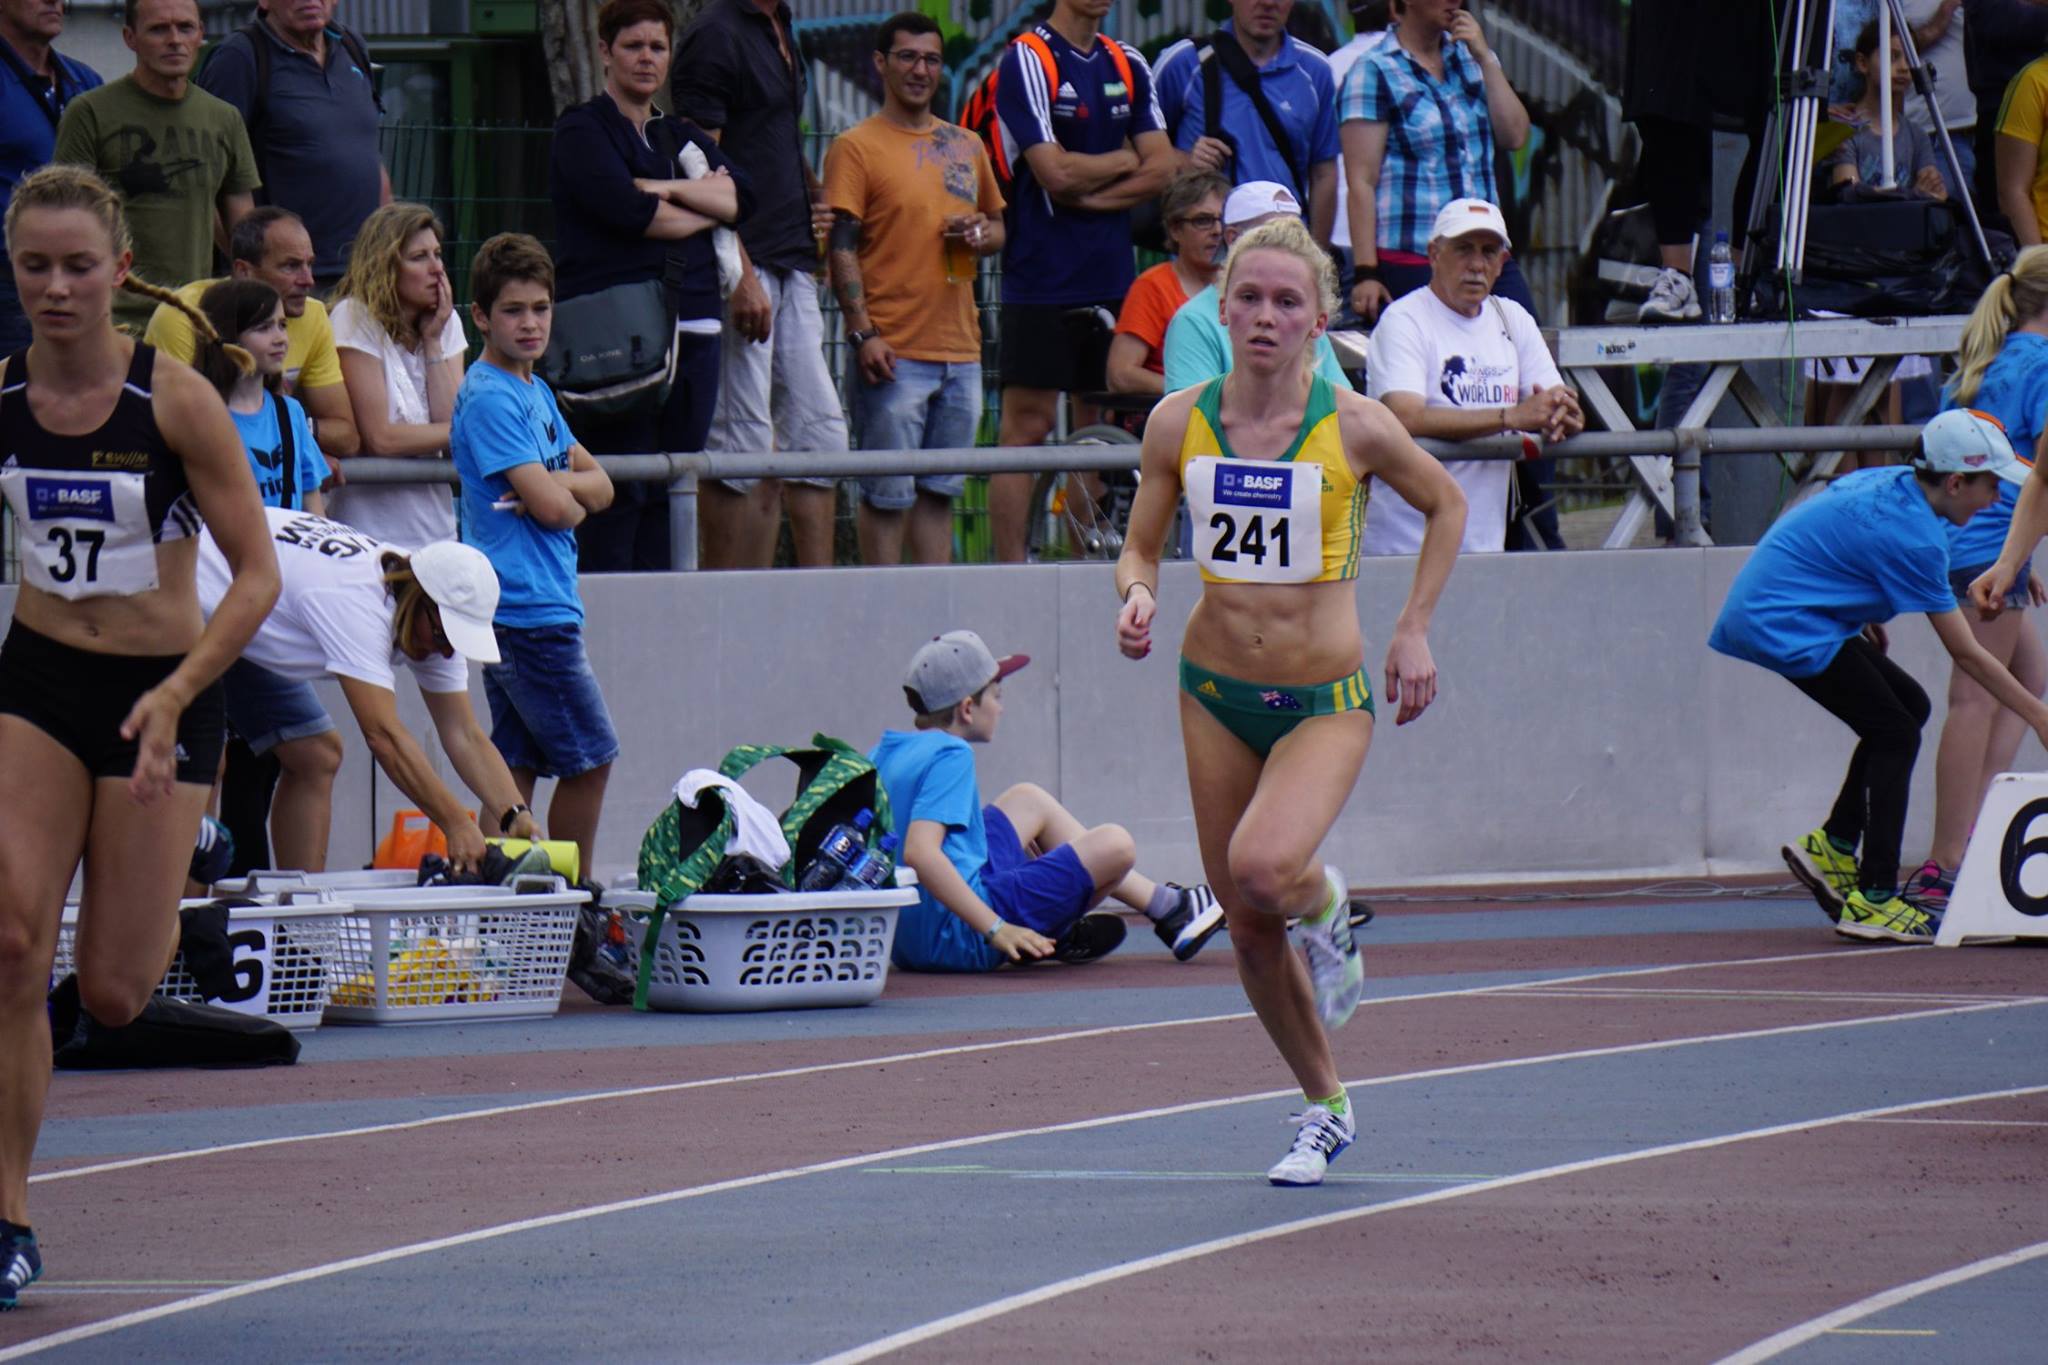 Sarah Billings: Photo courtesy of Athletics Australia http://athletics.com.au/ 